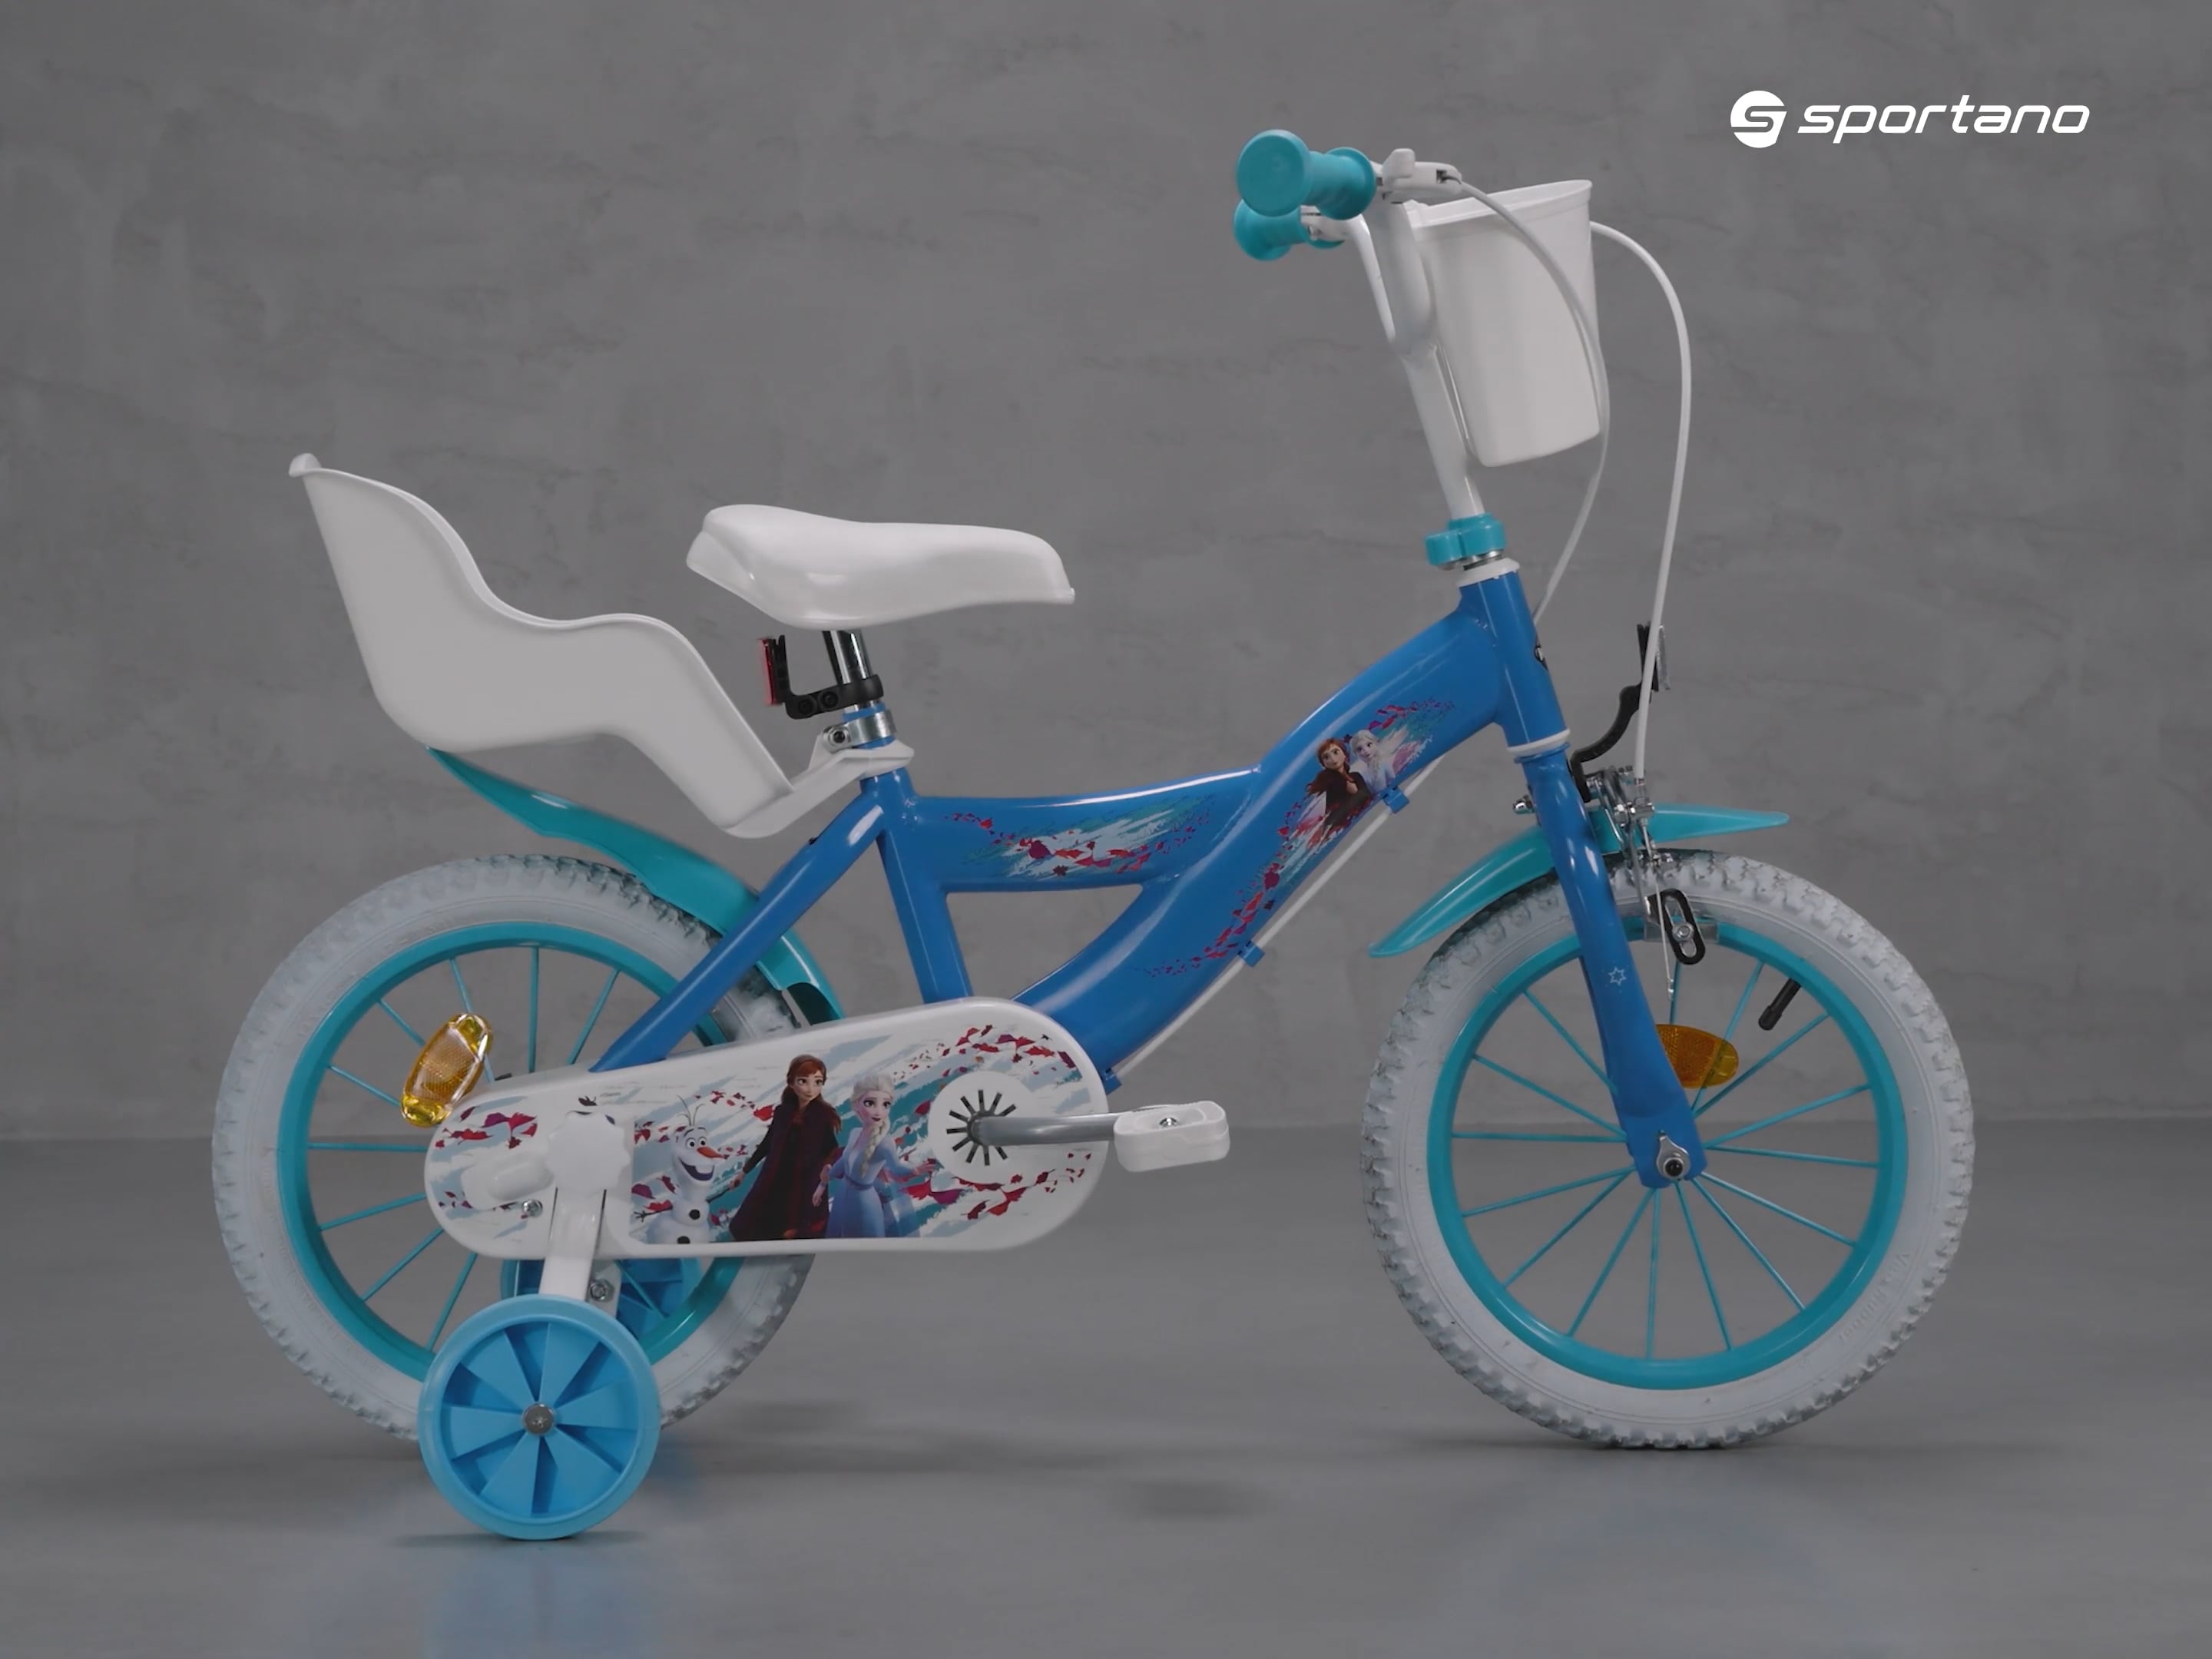 Huffy Frozen Copii echilibru biciclete albastru 24291W